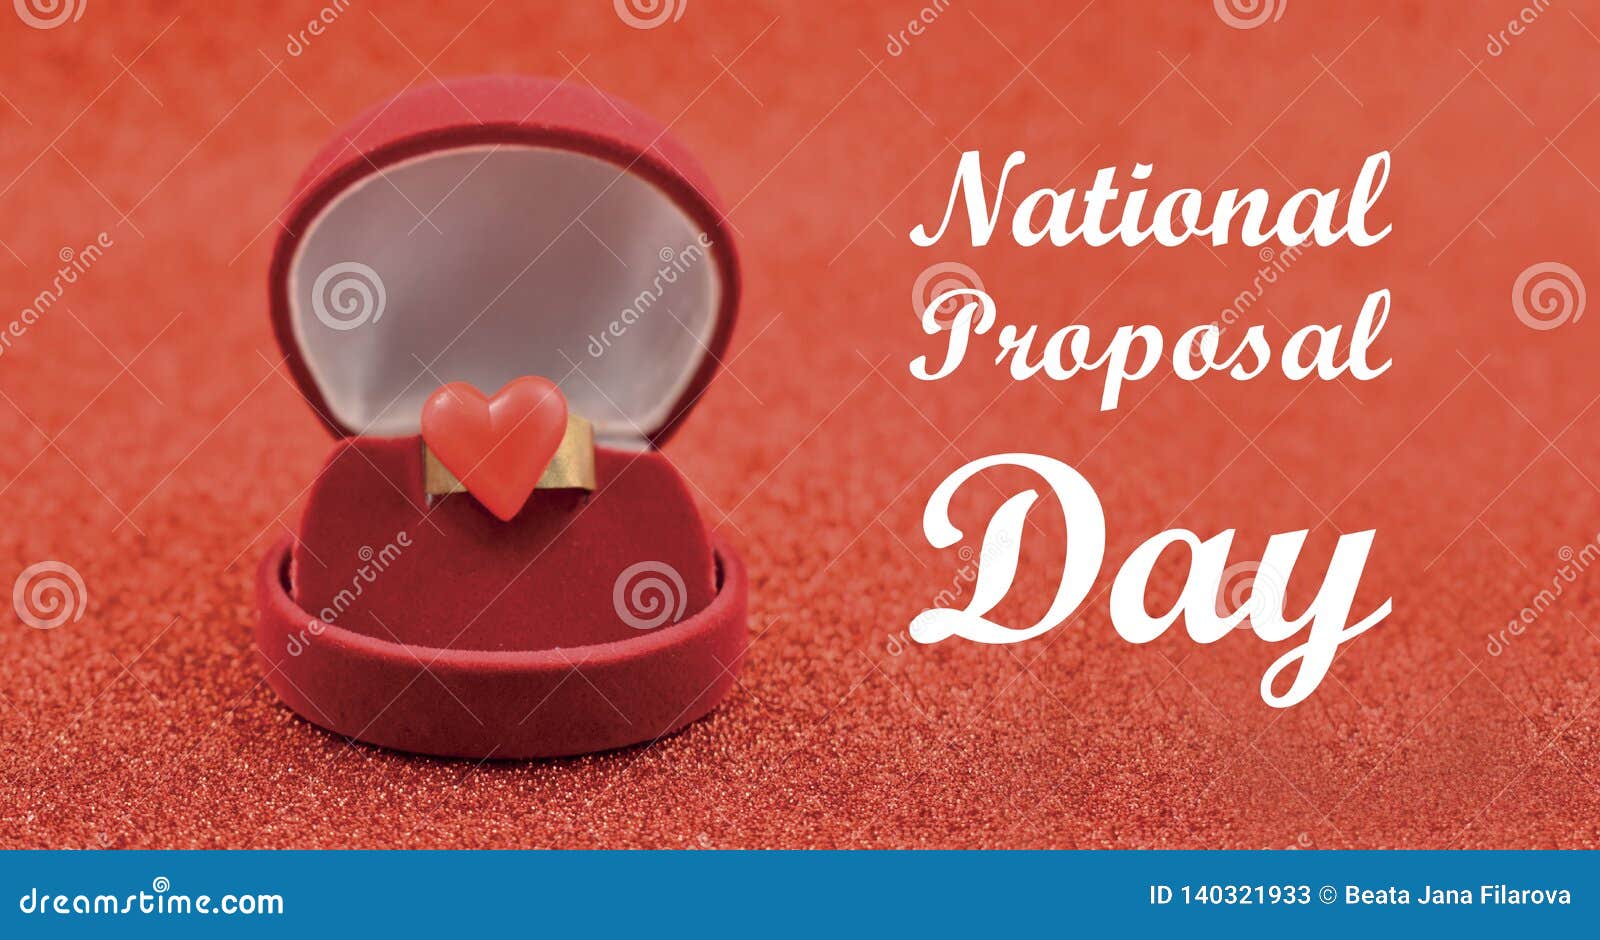 National Proposal Day Illustration Stock Illustration Illustration of